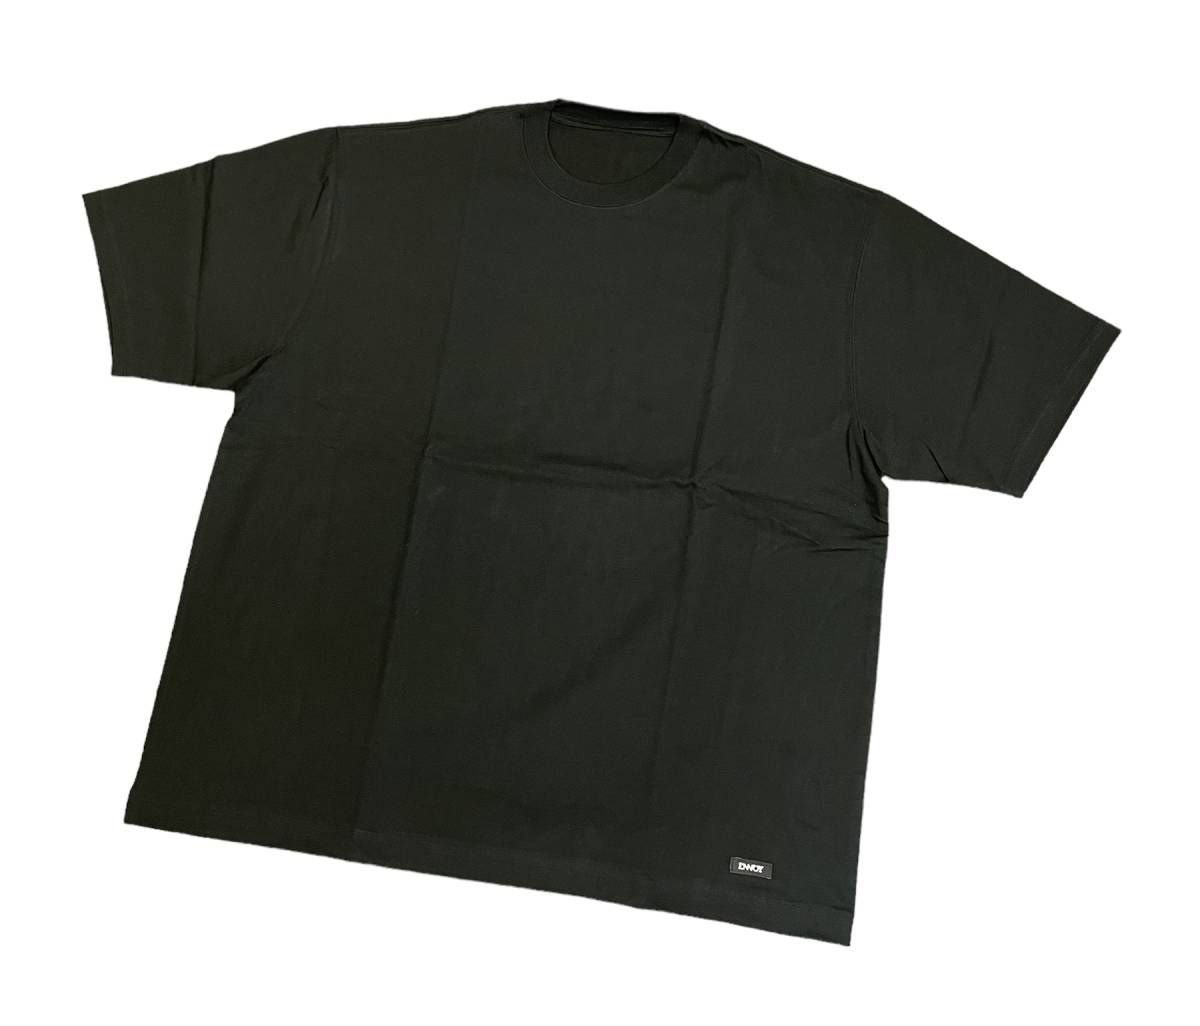 ENNOY エンノイ パック Tシャツ 3枚セット売り Lサイズ - Tシャツ ...